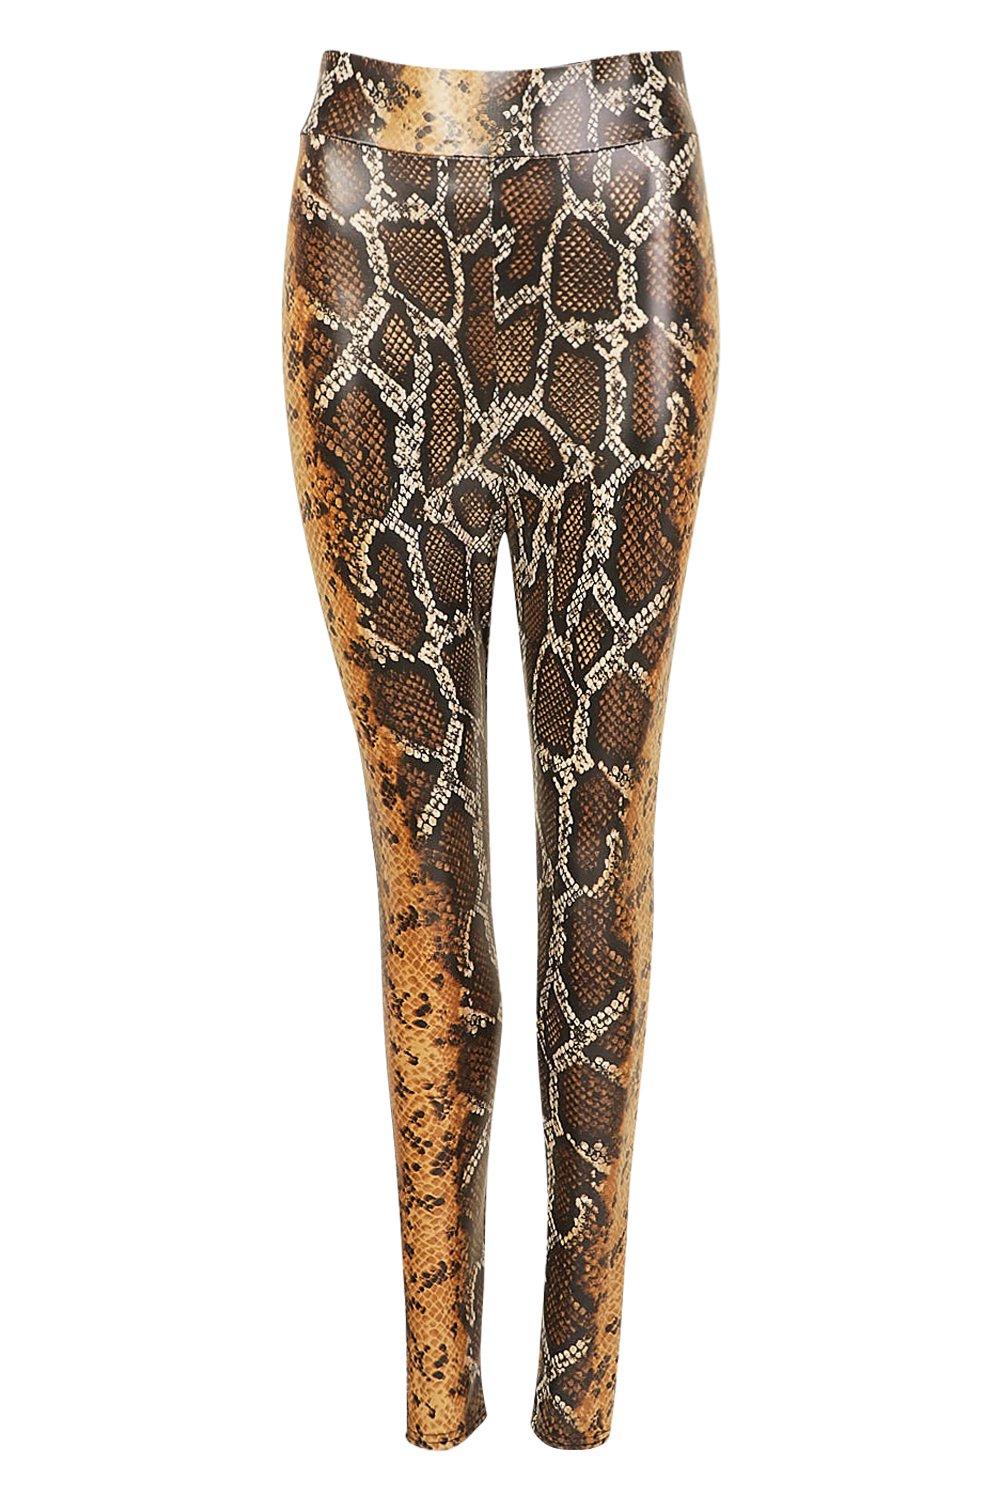 Leopard & Snake Skin Leggings Yoga Pants Petite Fit for Girls and